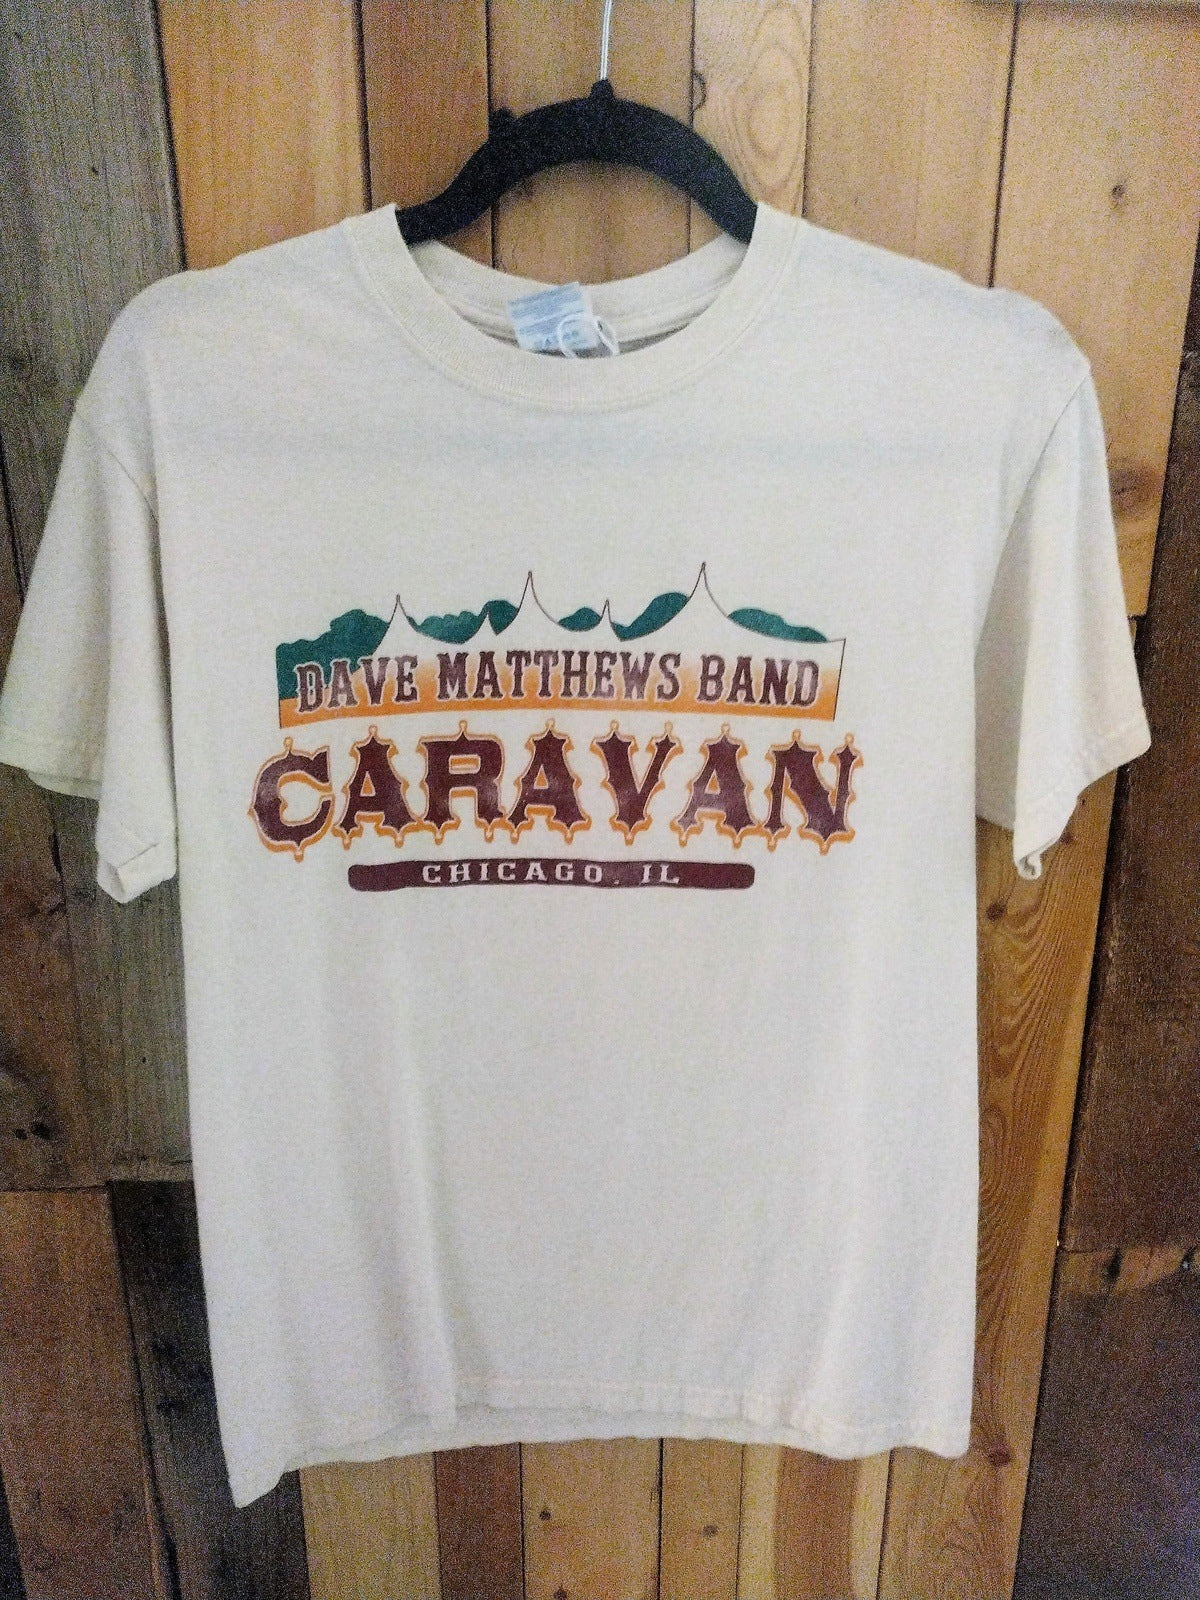 Dave Matthews Band Caravan 2011 Tour T Shirt Size Small